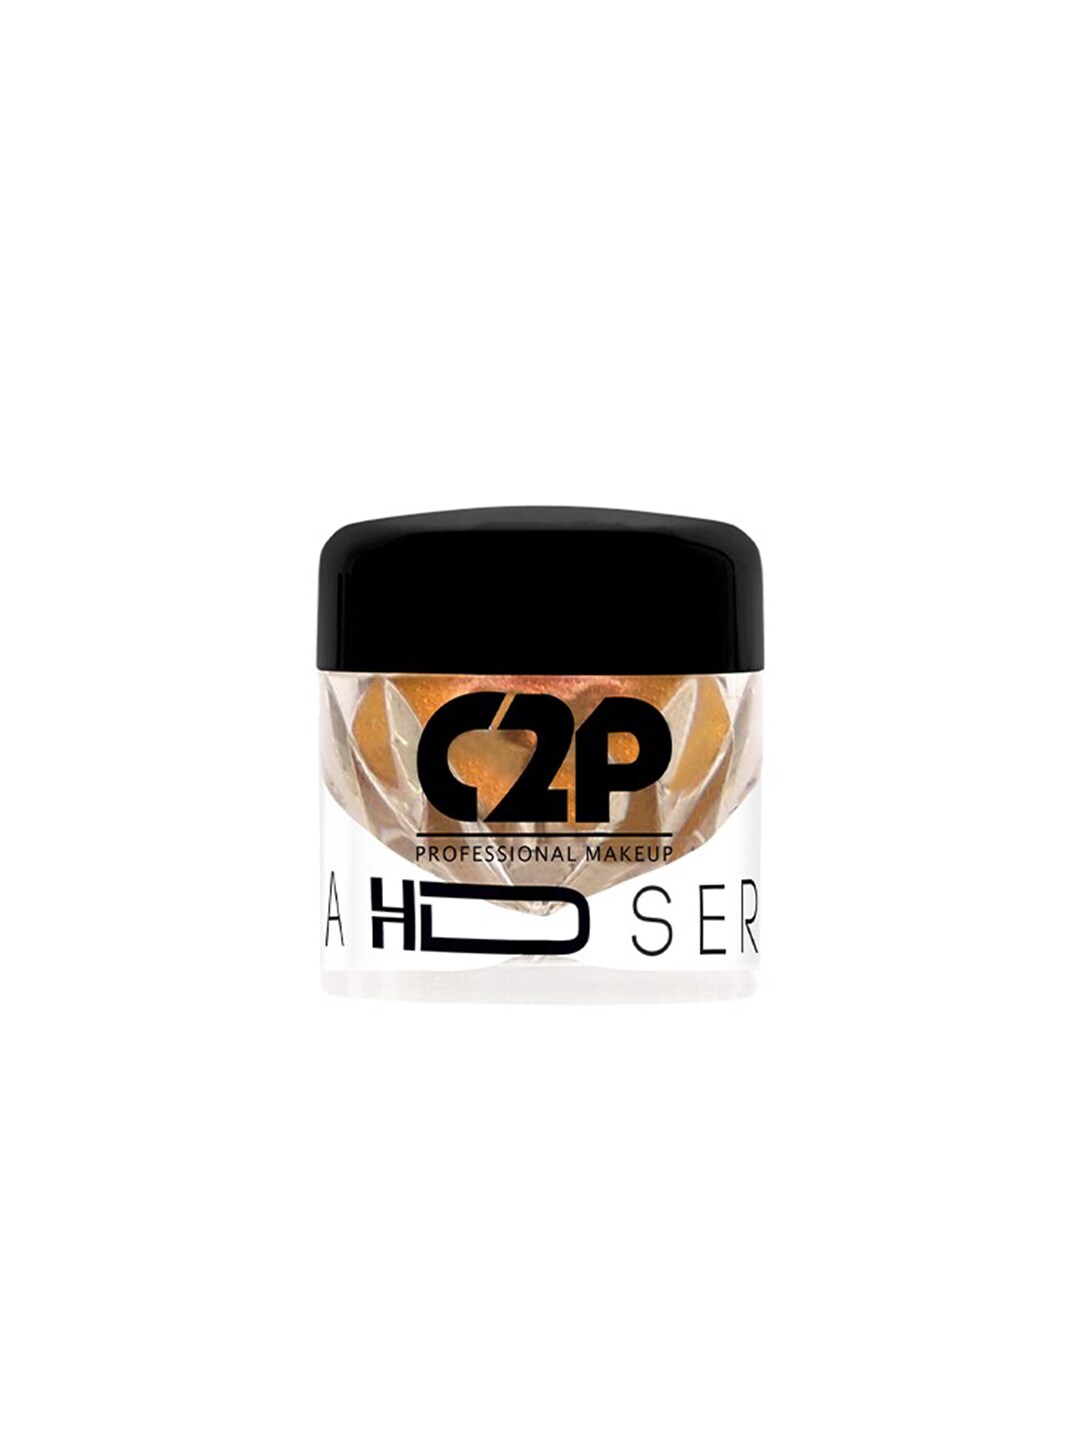 C2P PROFESSIONAL MAKEUP HD Loose Precious Pigments Eyeshadow - Skipper 58 Price in India